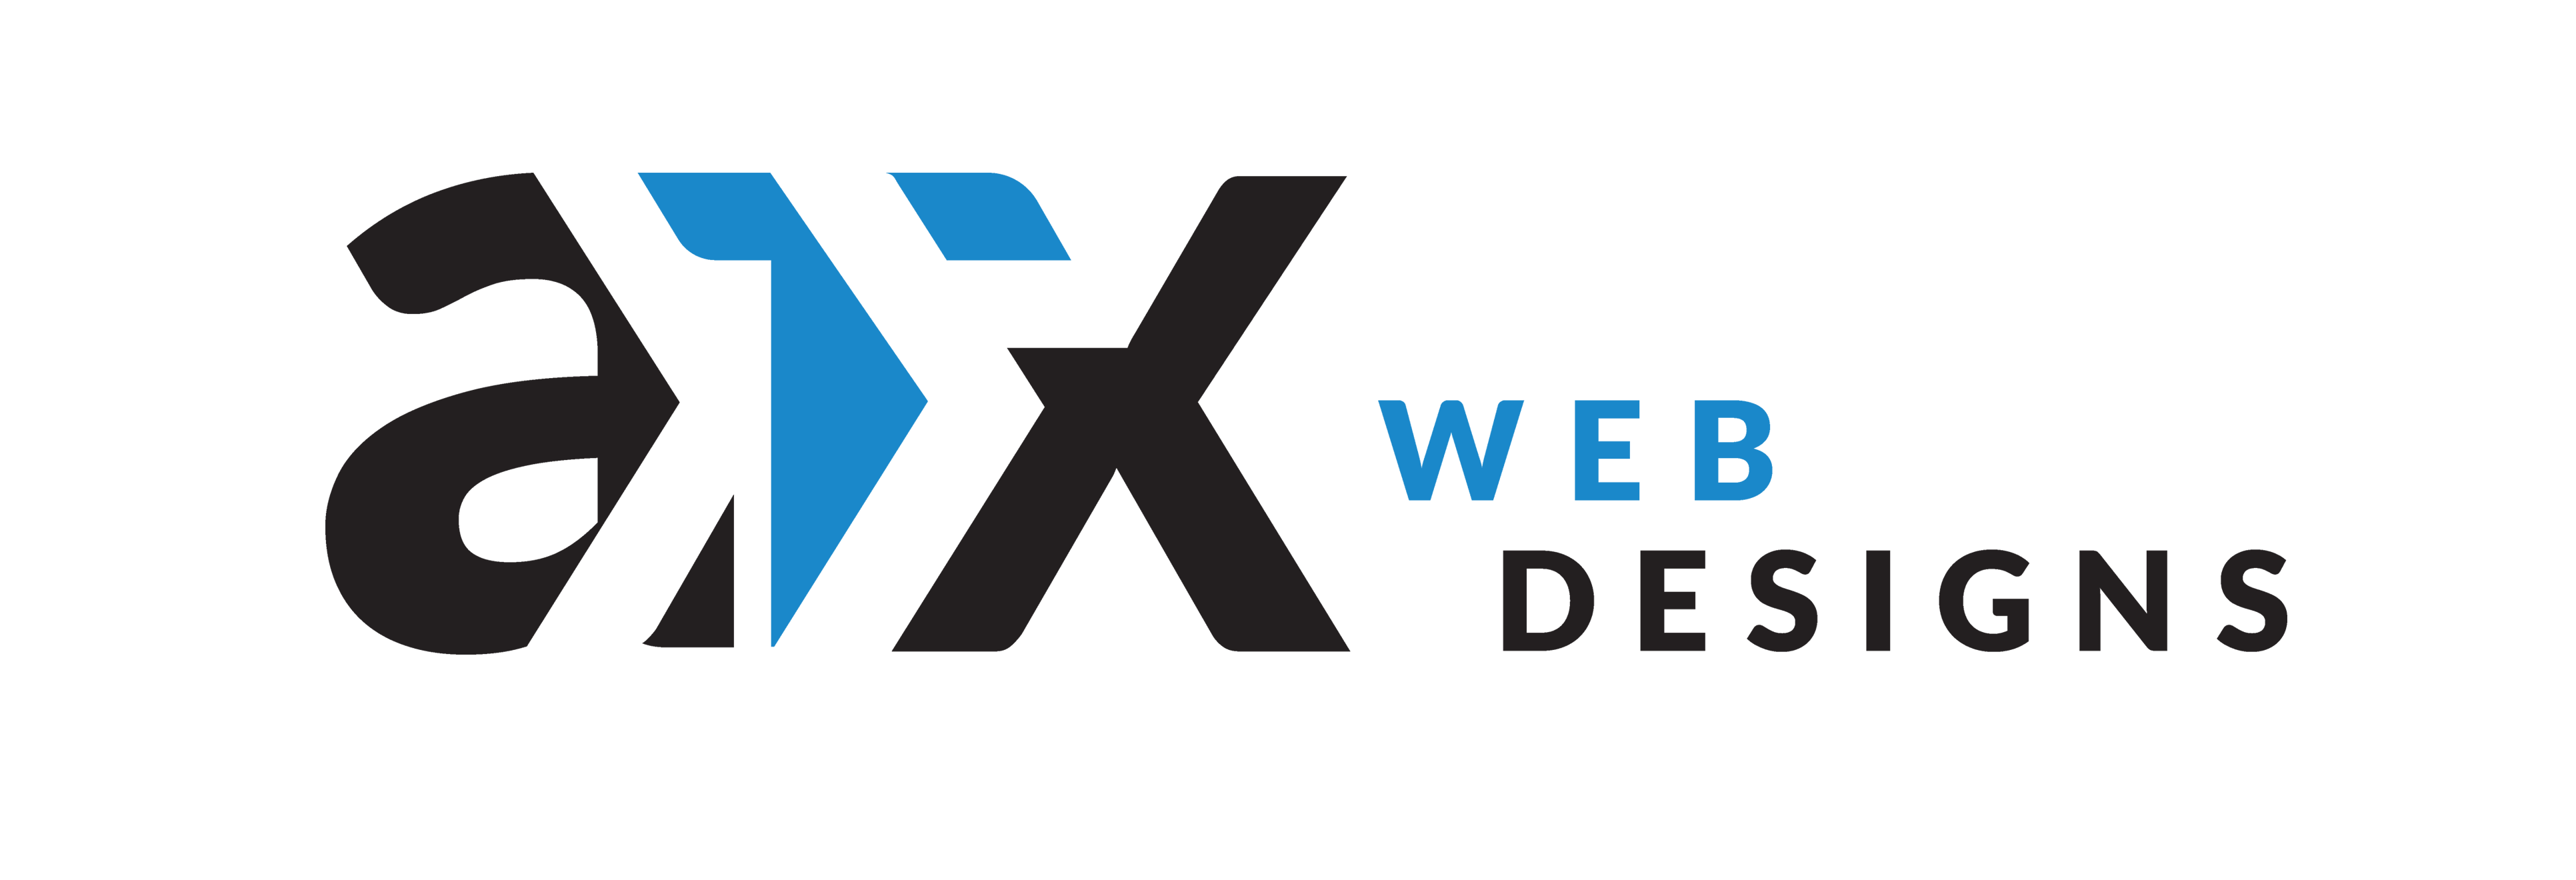 Top Web Design Business Logo: ATX Web Designs